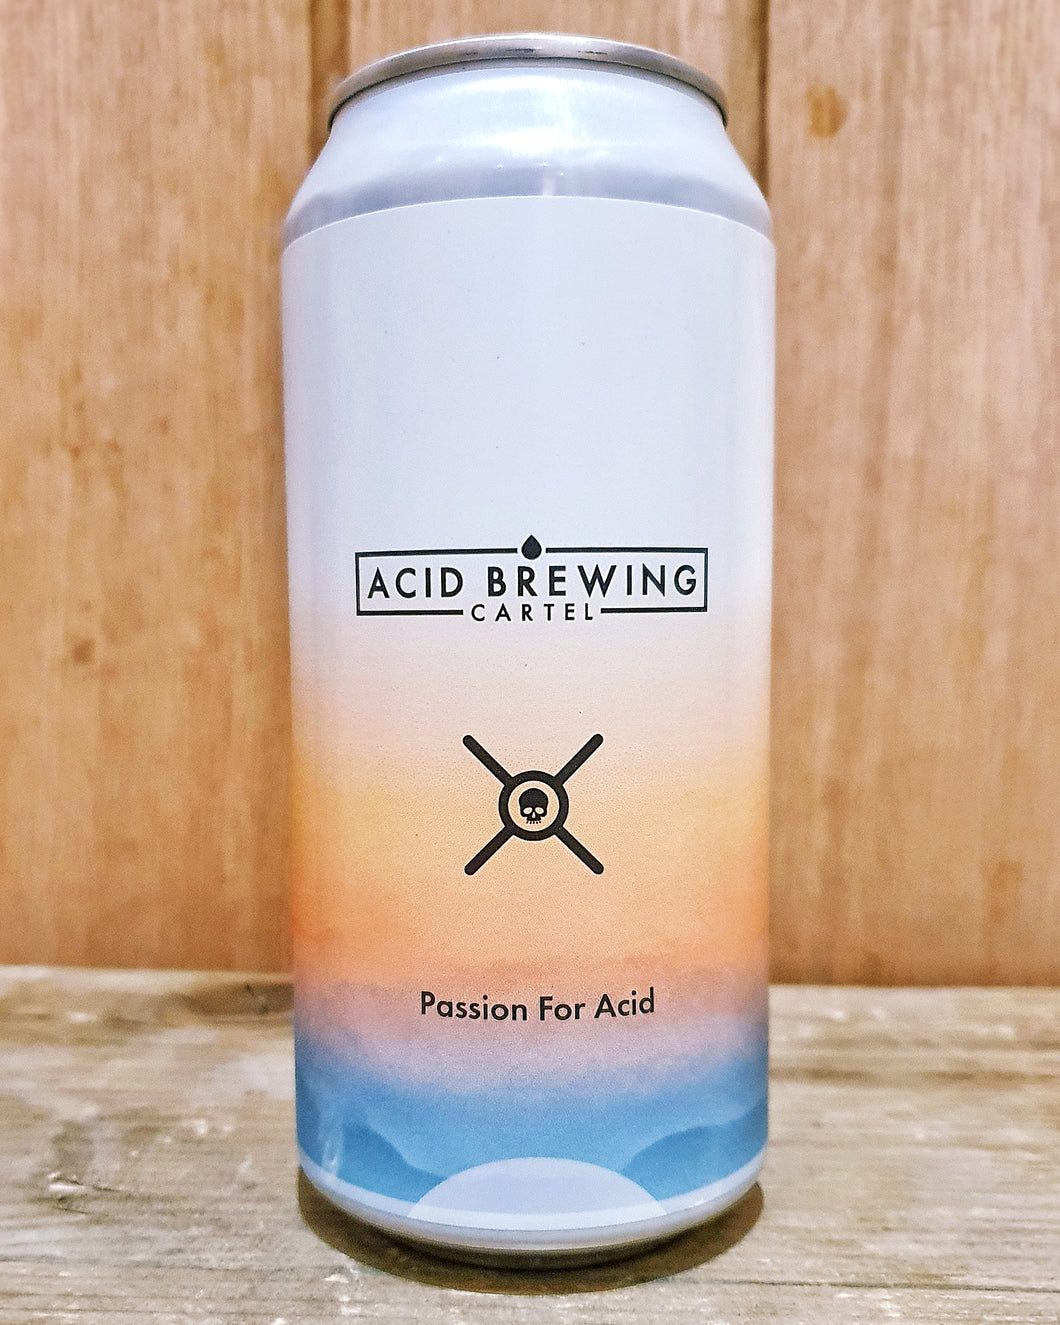 Acid Brewing Cartel - Passion For Acid